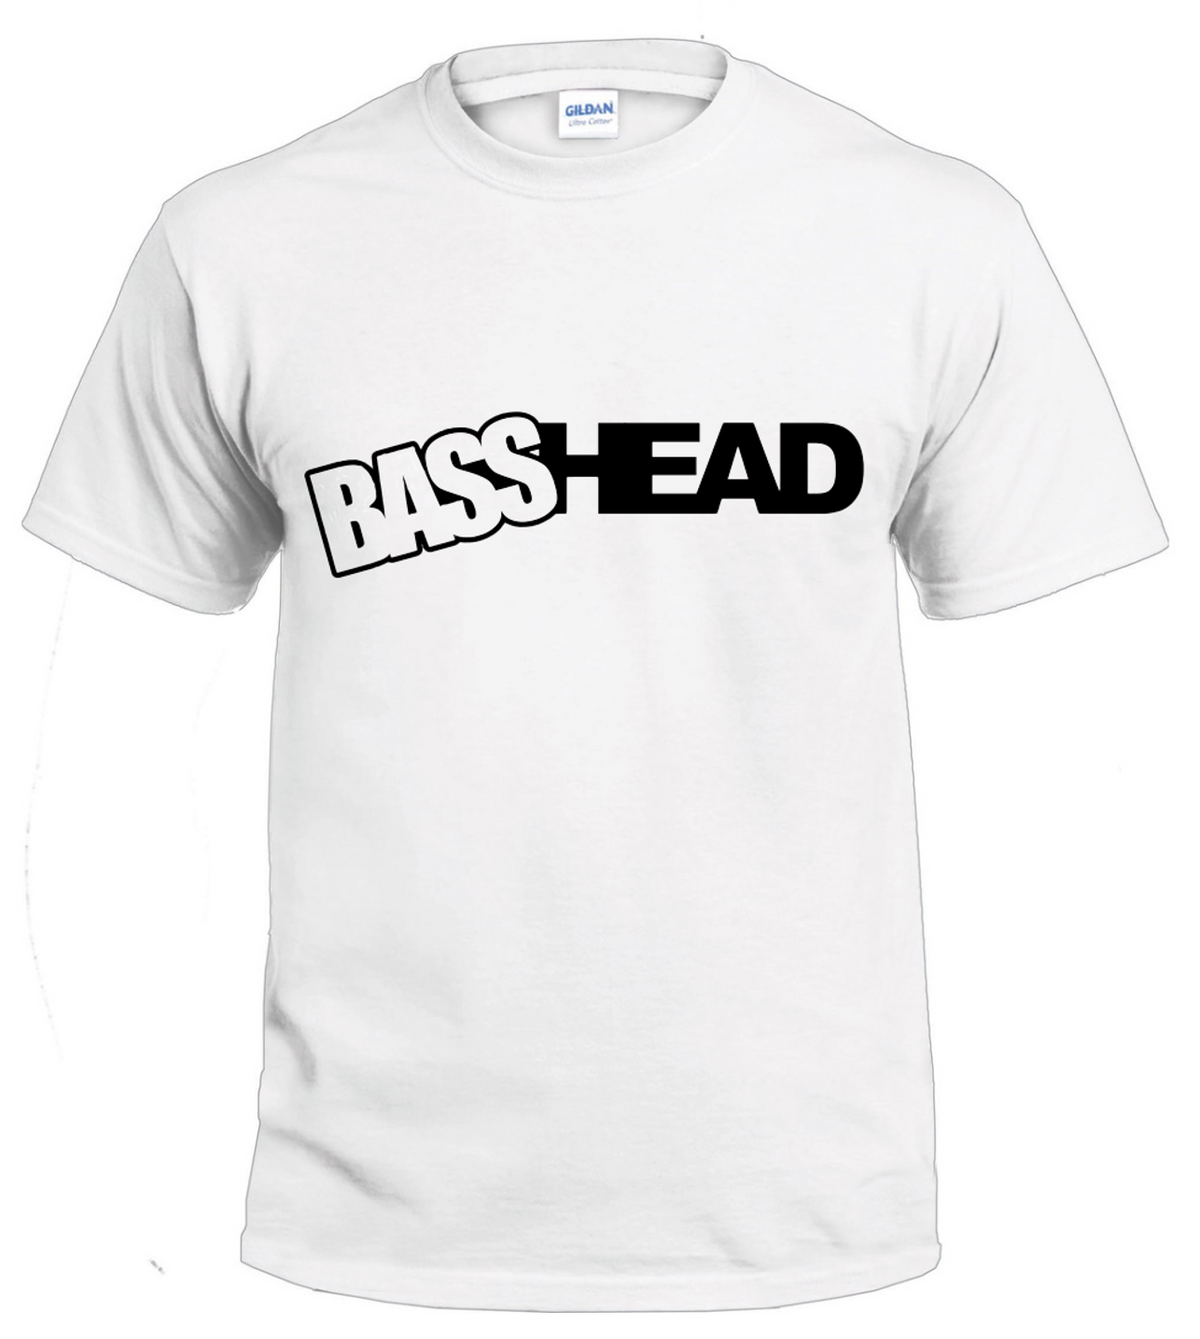 Broken Basshead t-shirt